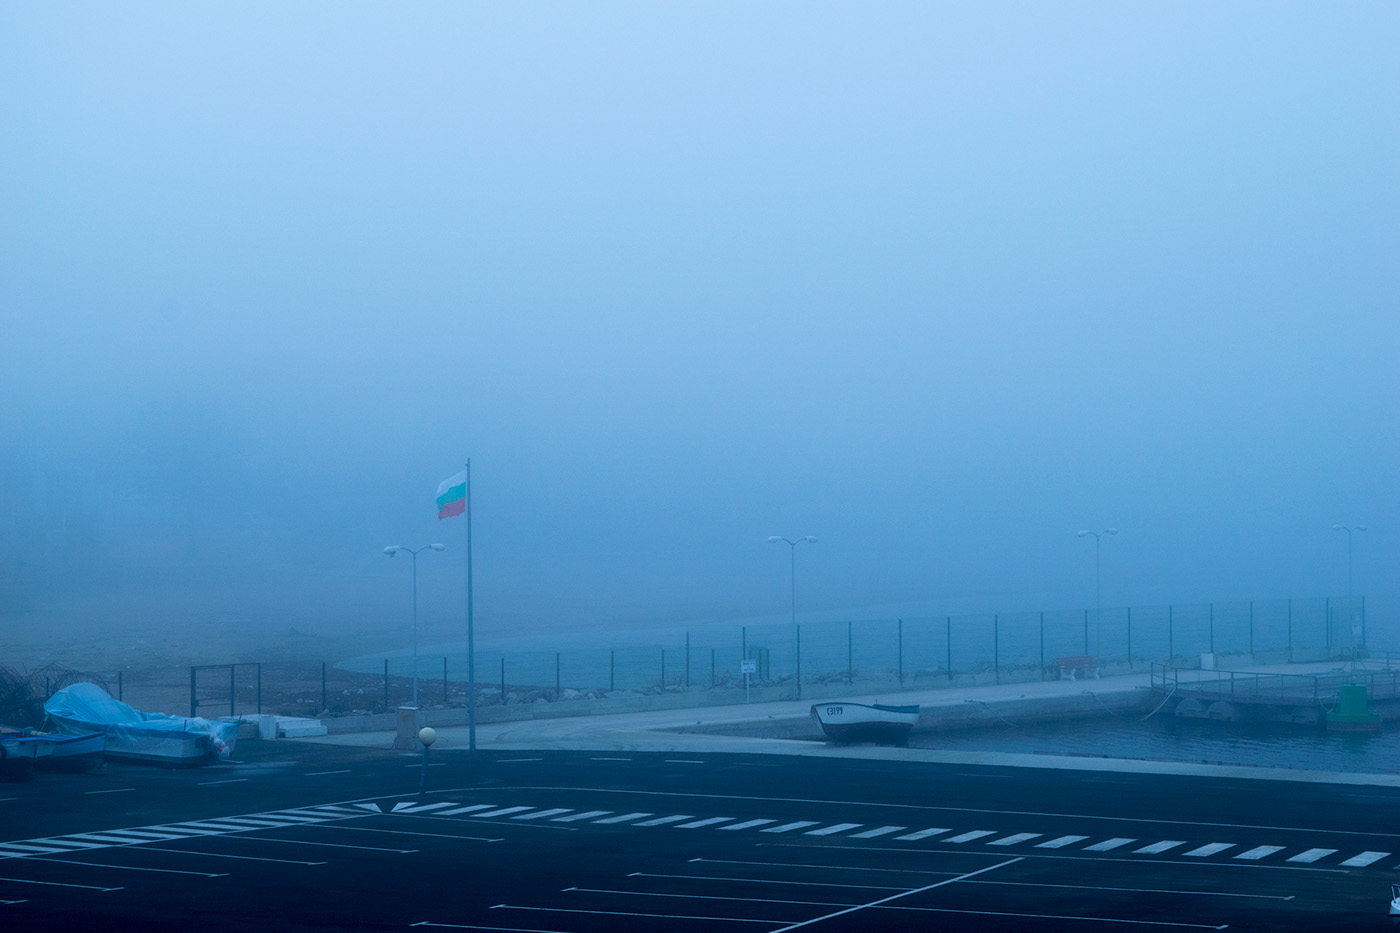 chernomorets port pier fog mist